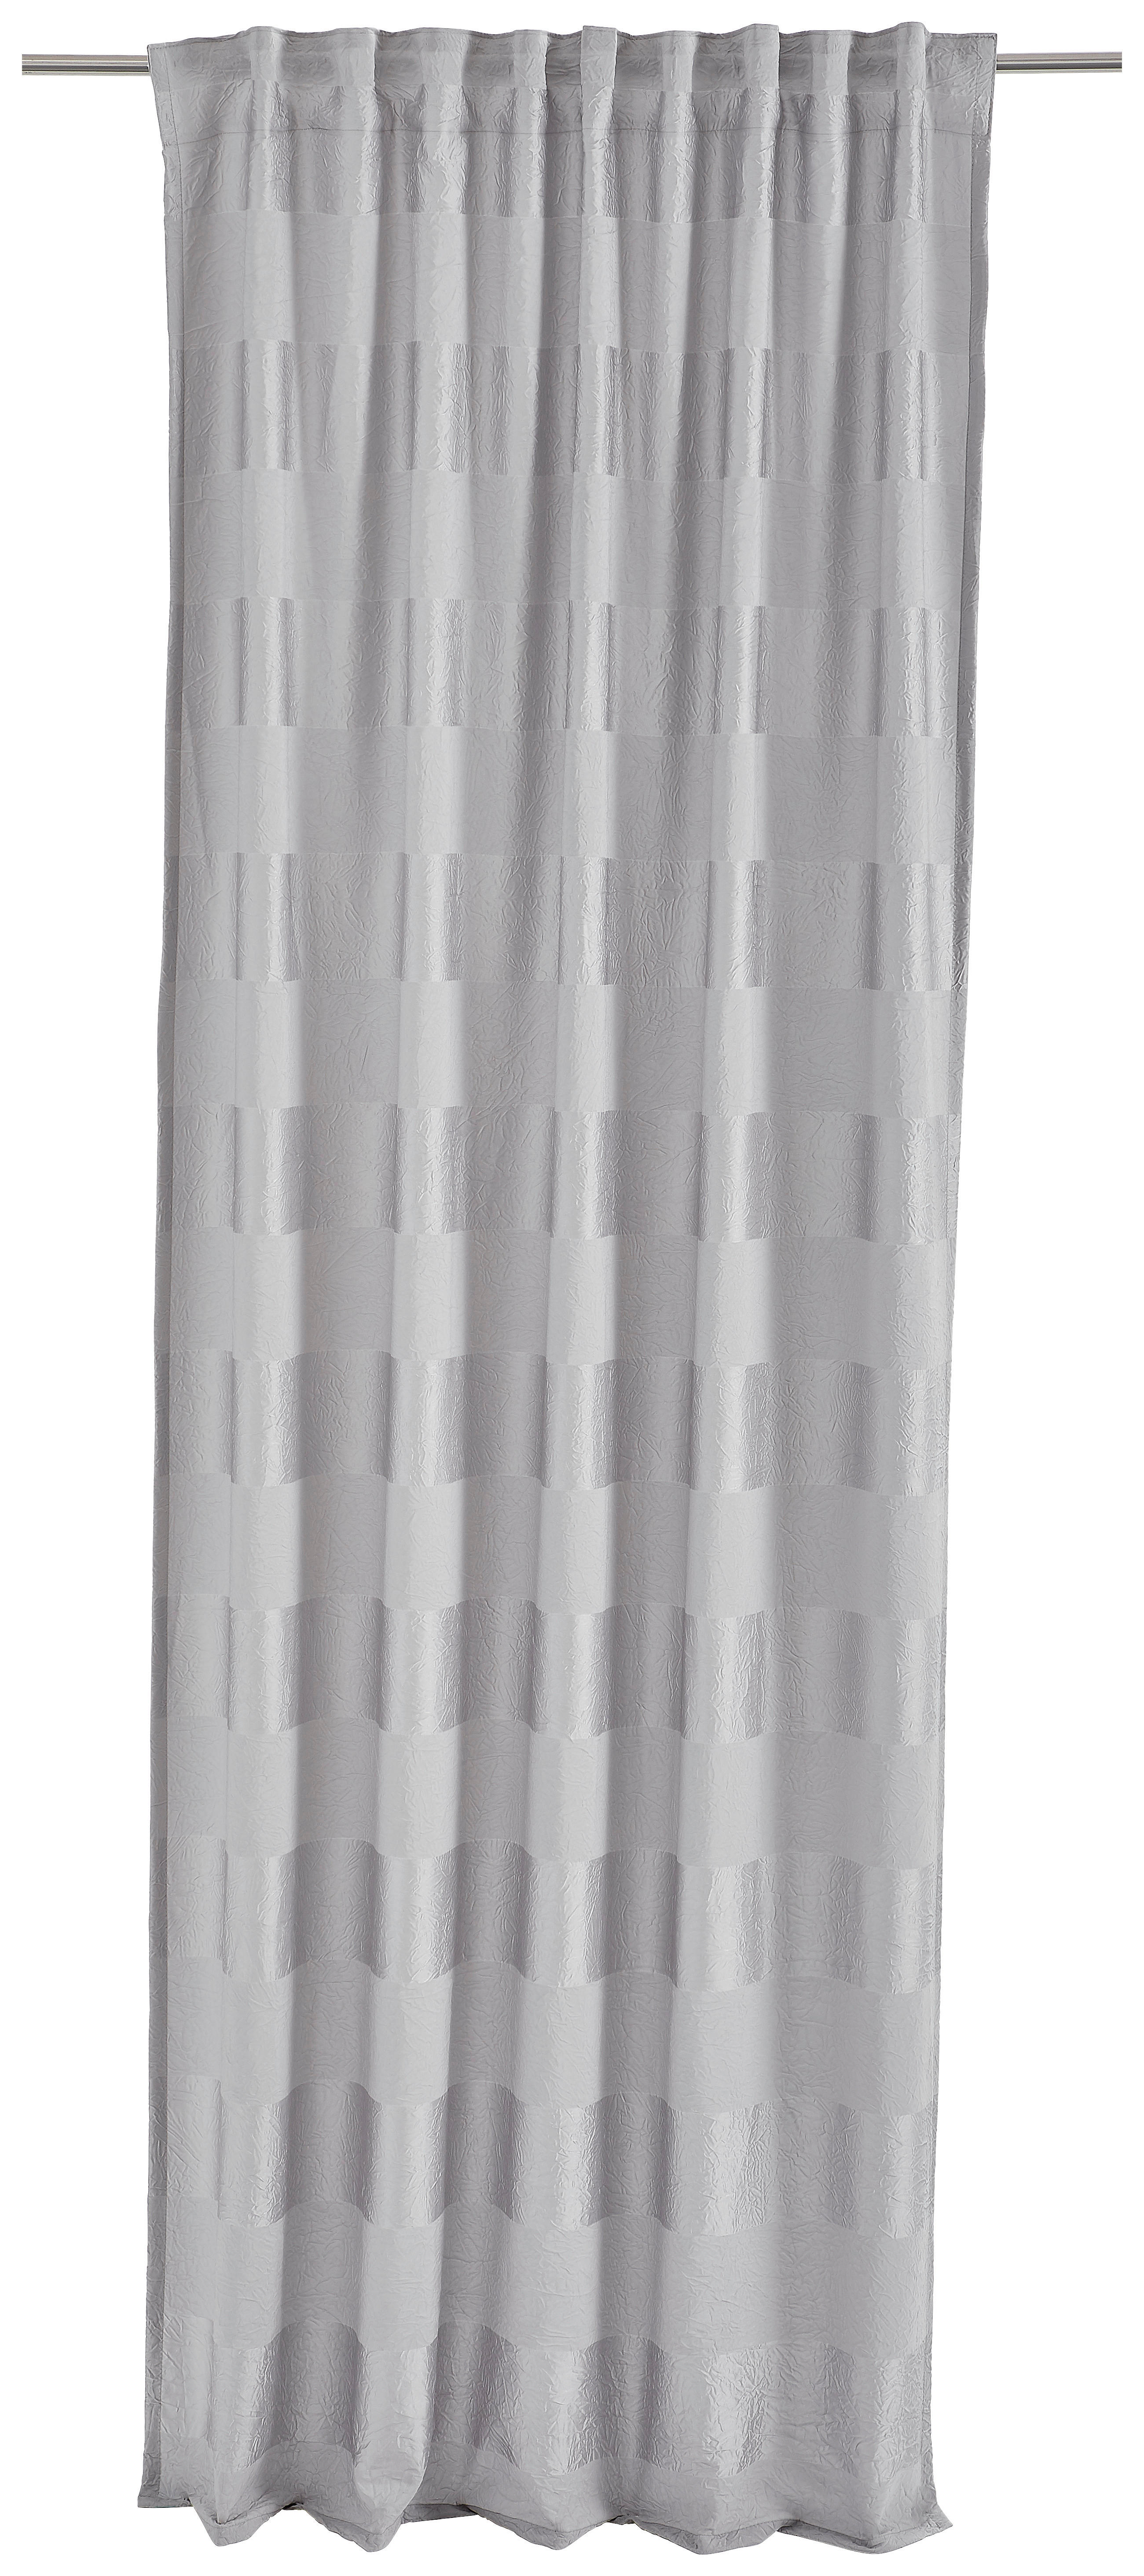 FERTIGVORHANG GISBORNE blickdicht 135/245 cm   - Silberfarben, Basics, Textil (135/245cm) - Esposa